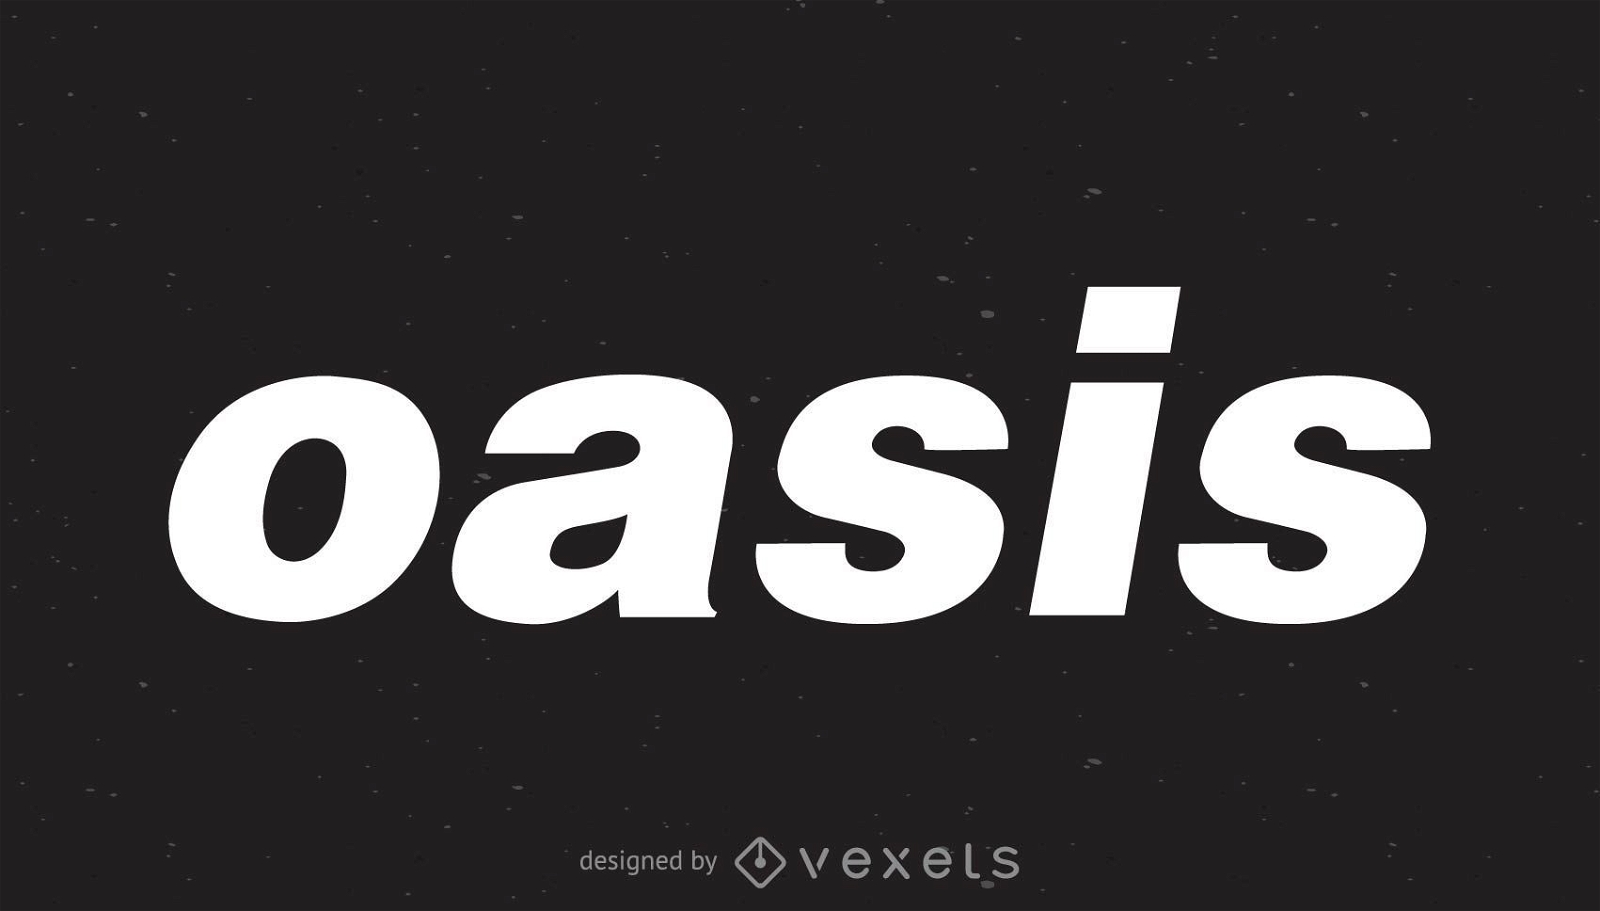 Oasis band logo 